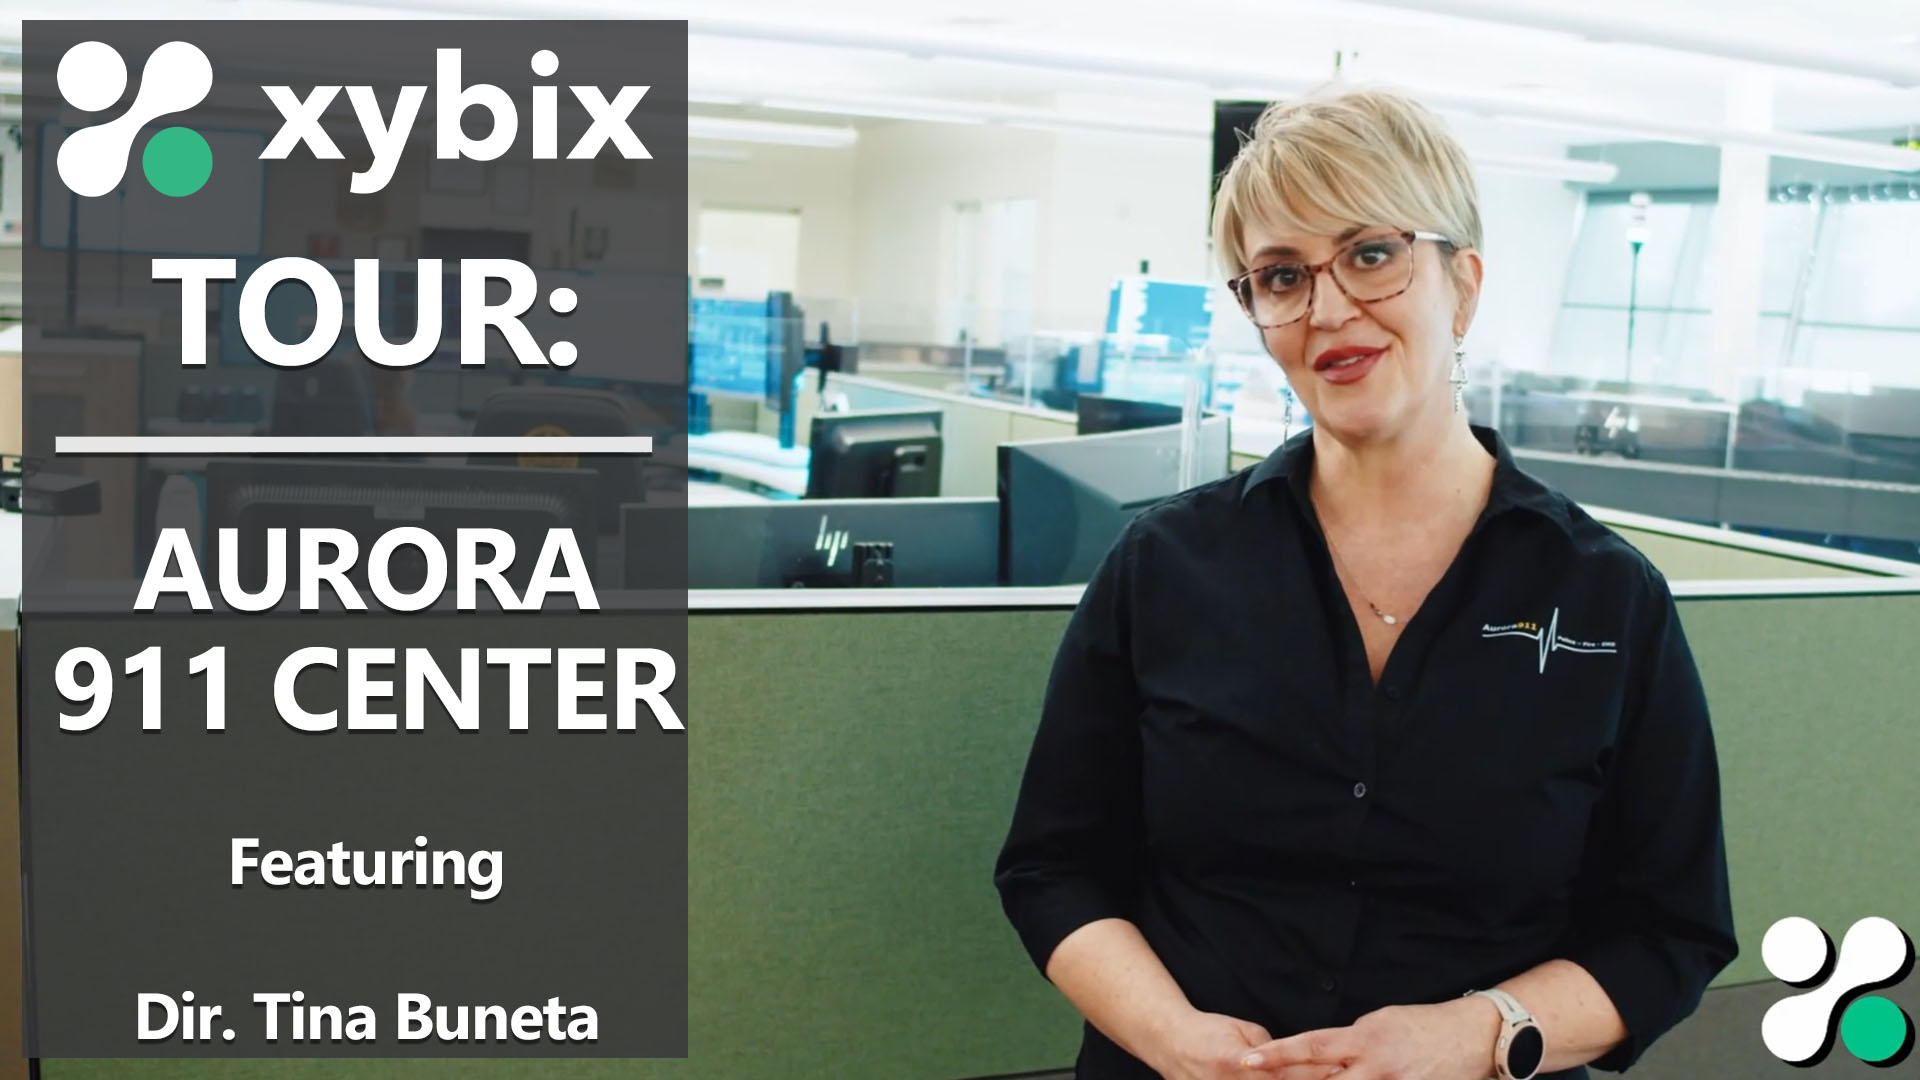 Xybix Tour of the Aurora 911 Center (CO) featuring Dir. Tina Buneta